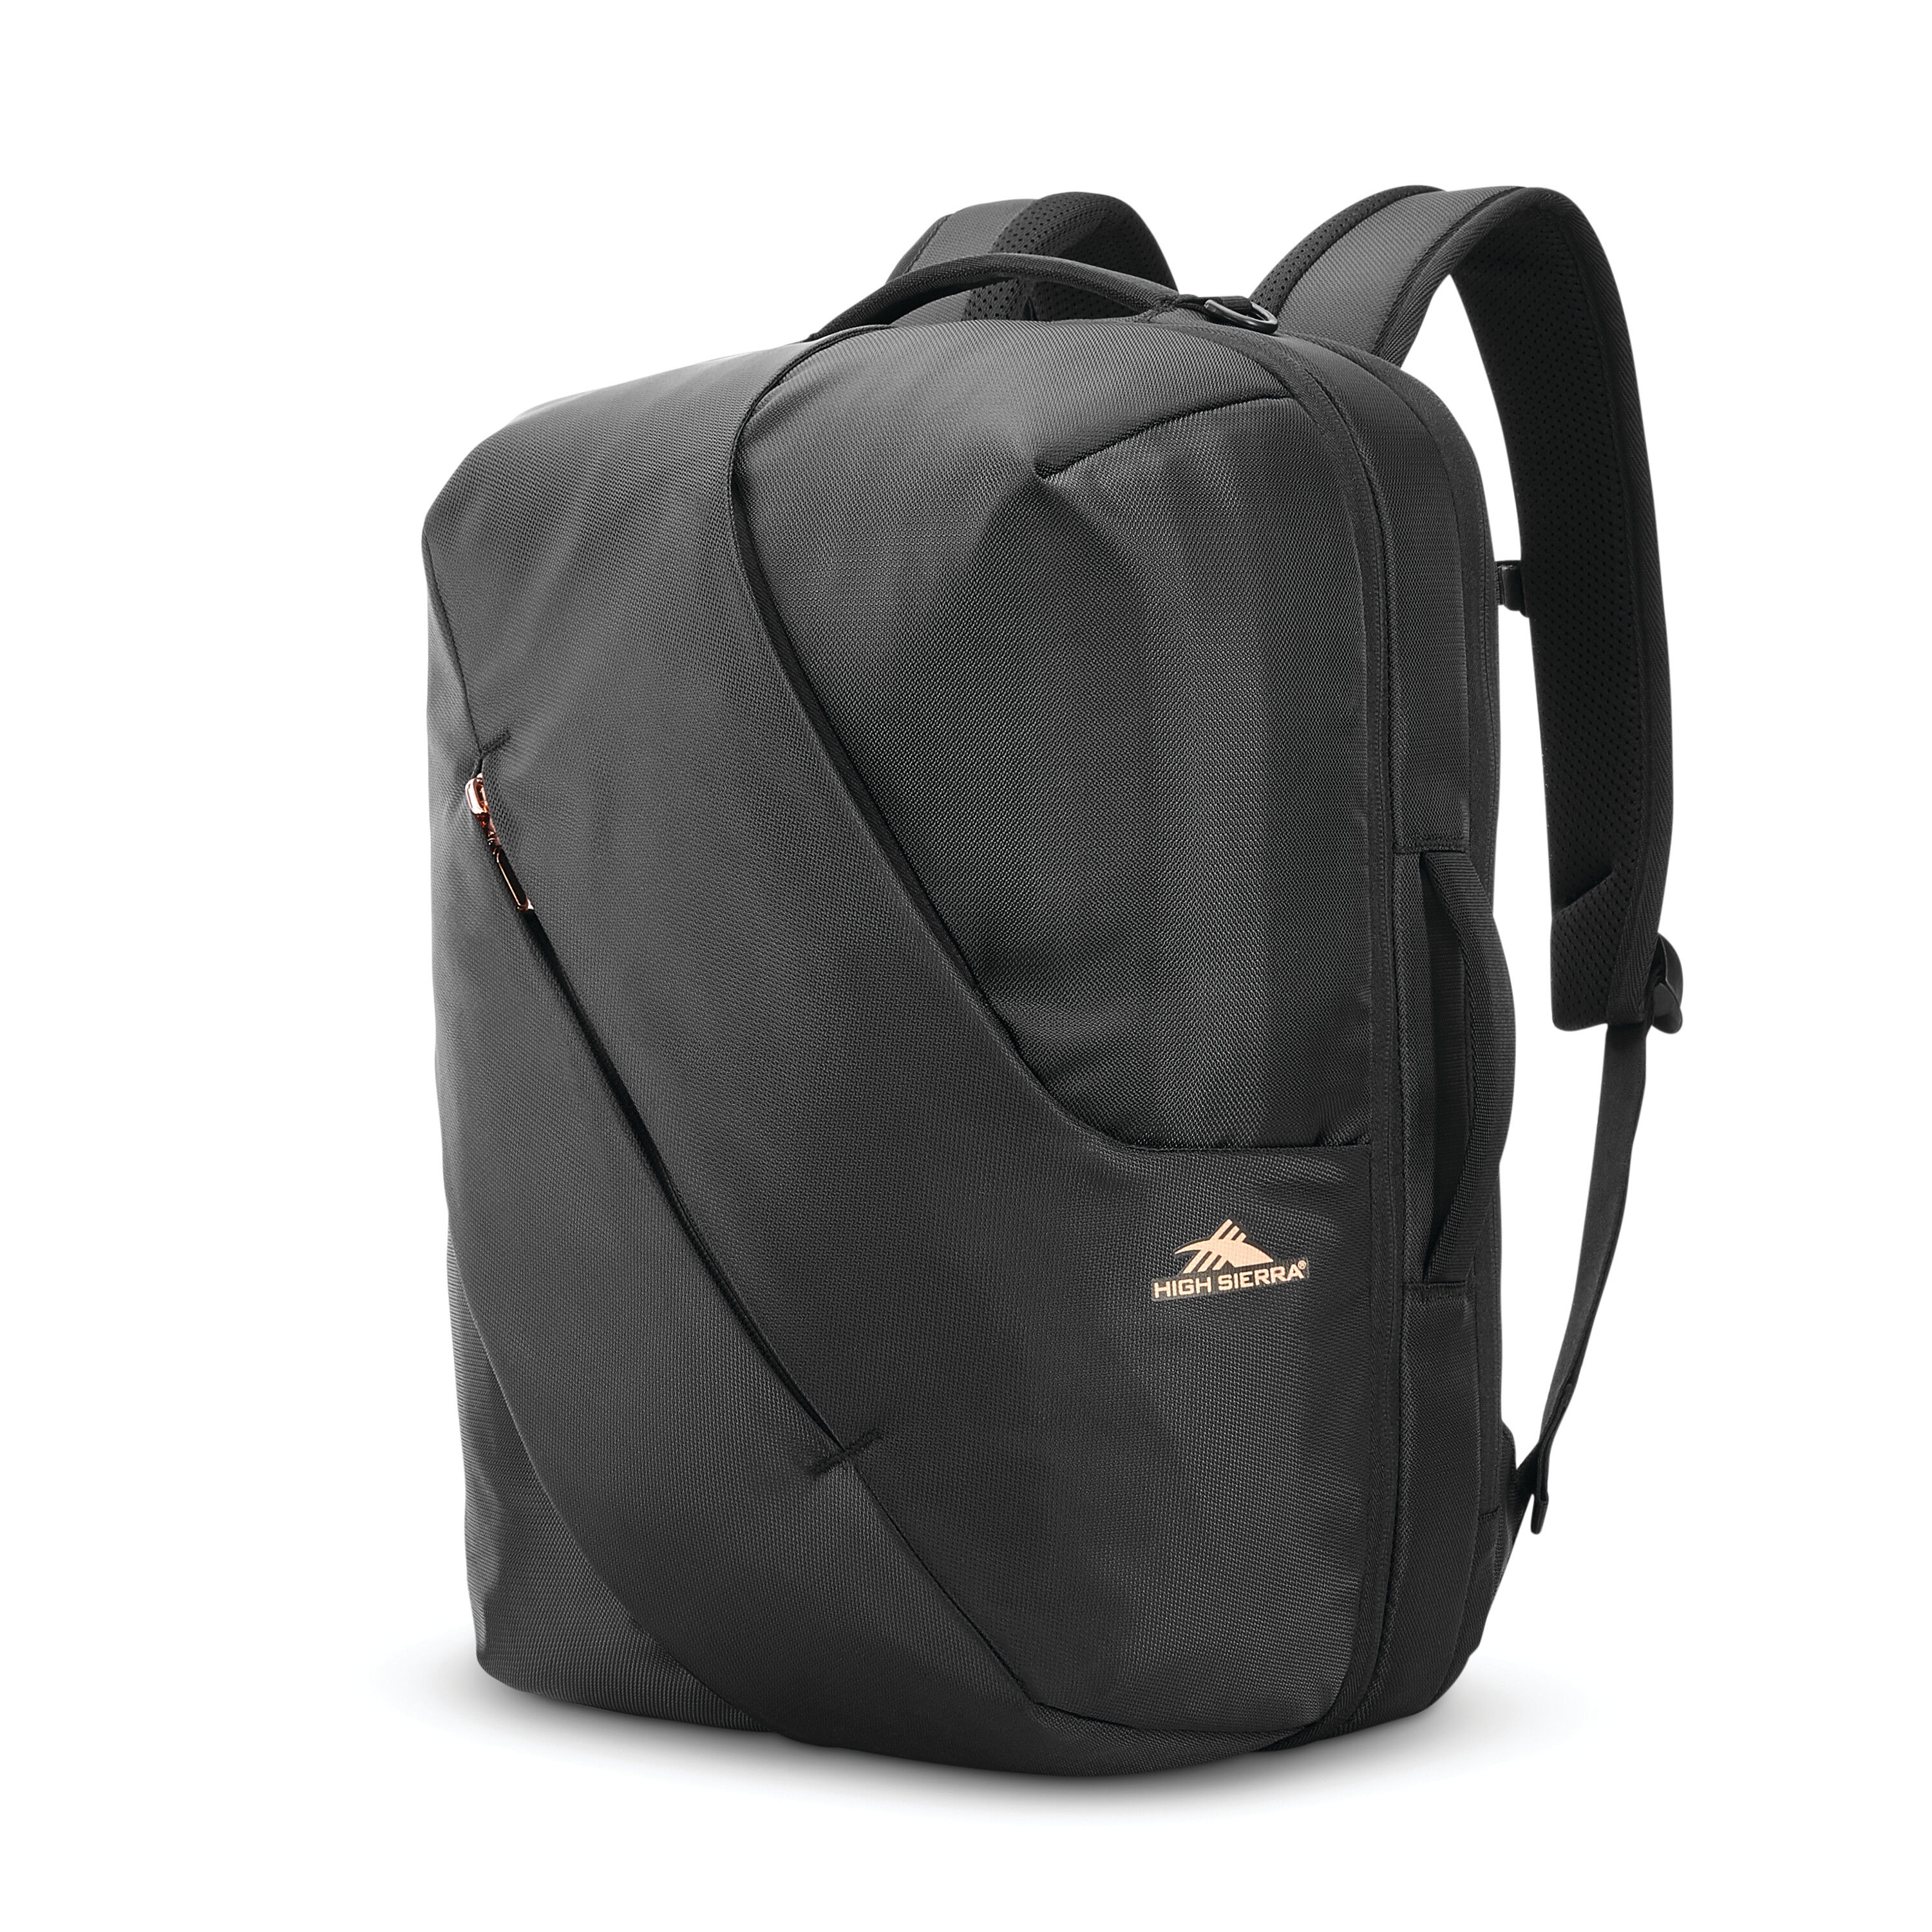 Best Gym Bag Laptop Compartment, Bag Backpack Fitness Gym